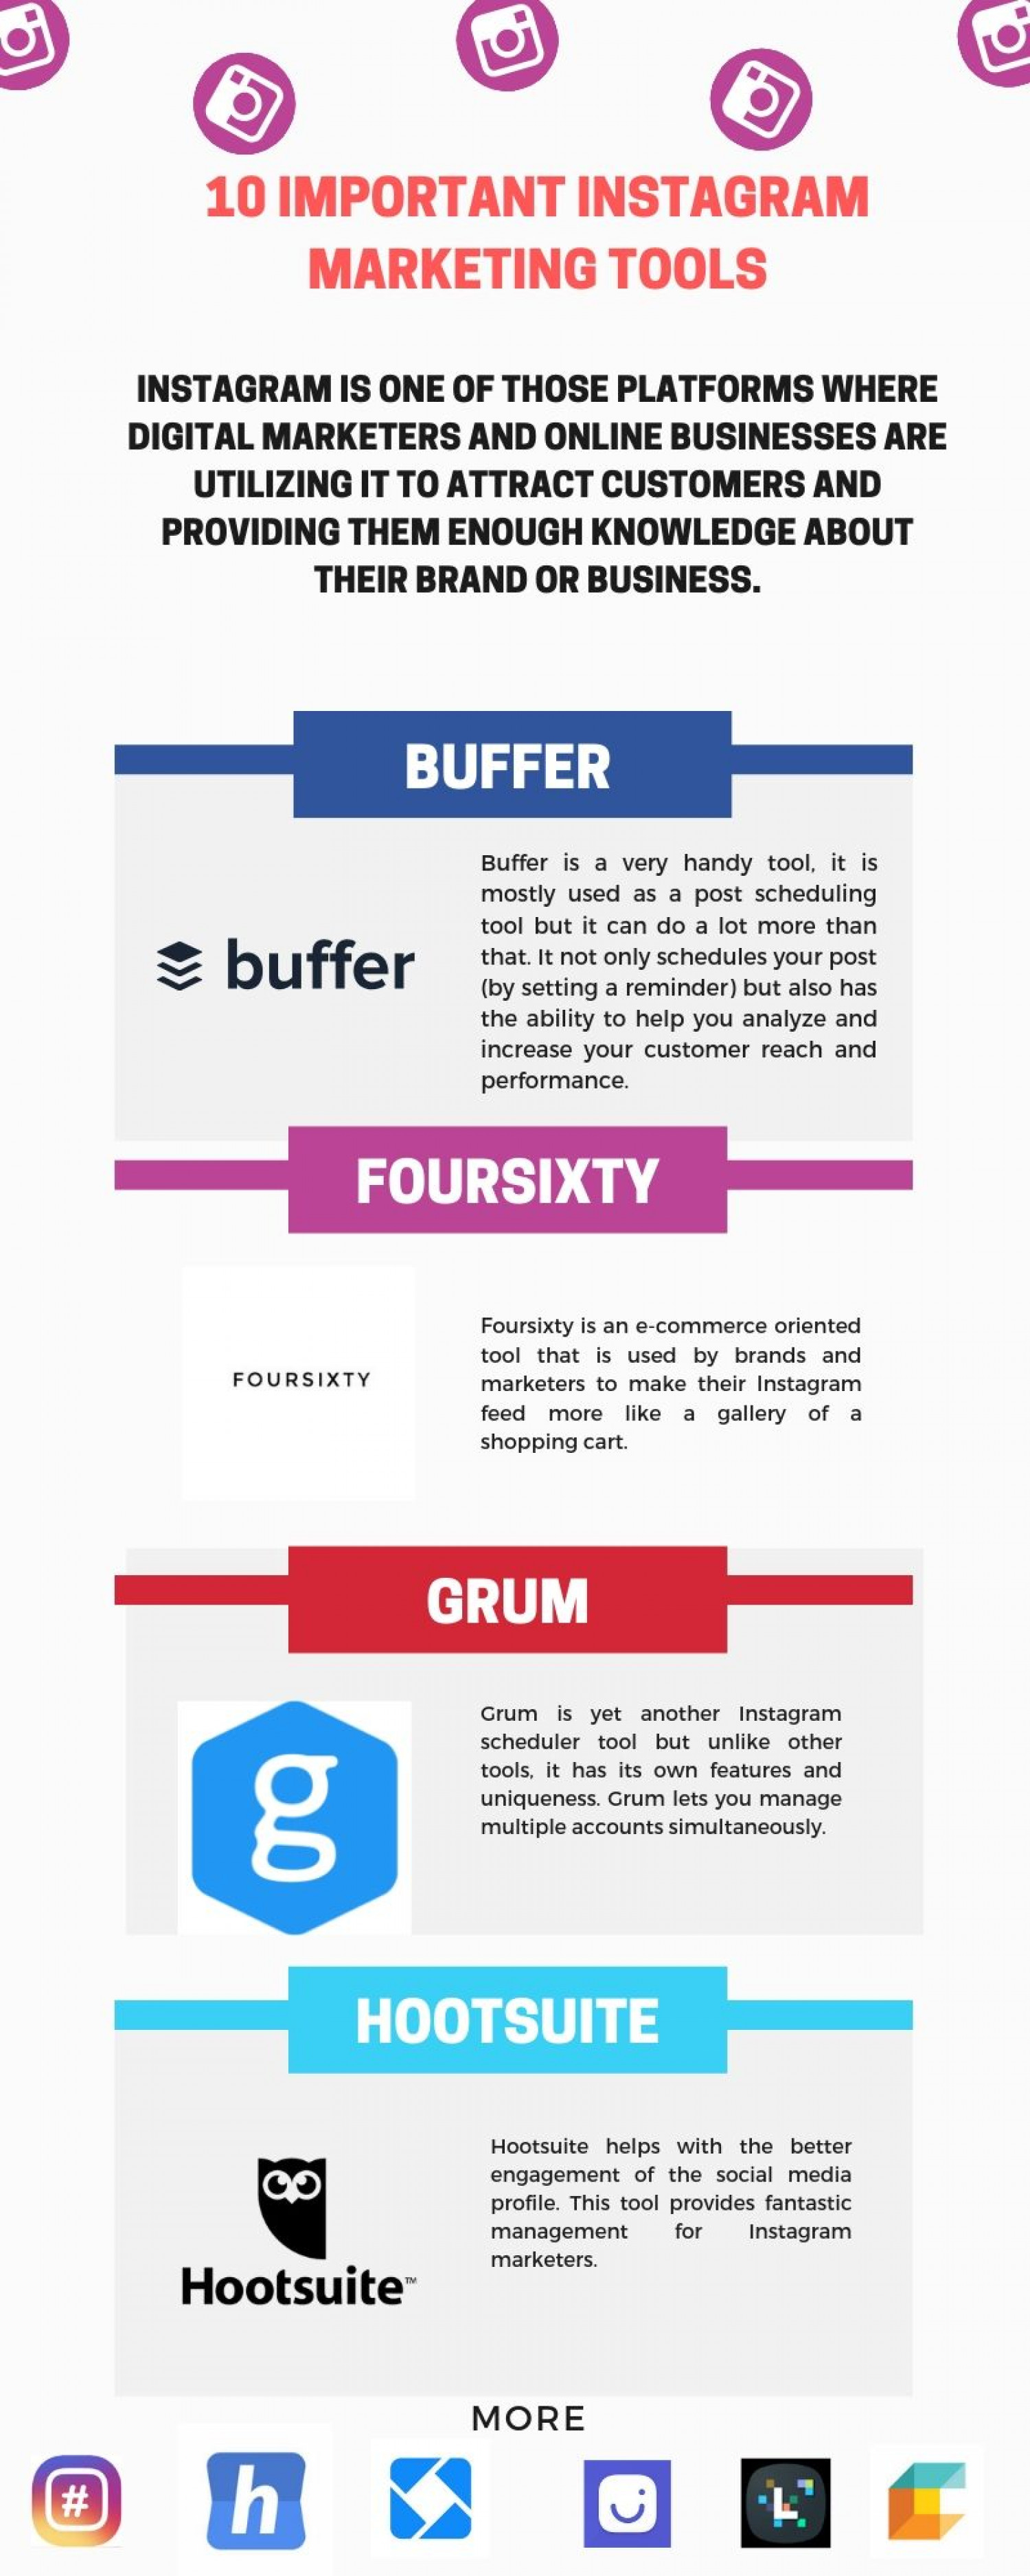 10 Important Instagram Marketing Tools Infographic